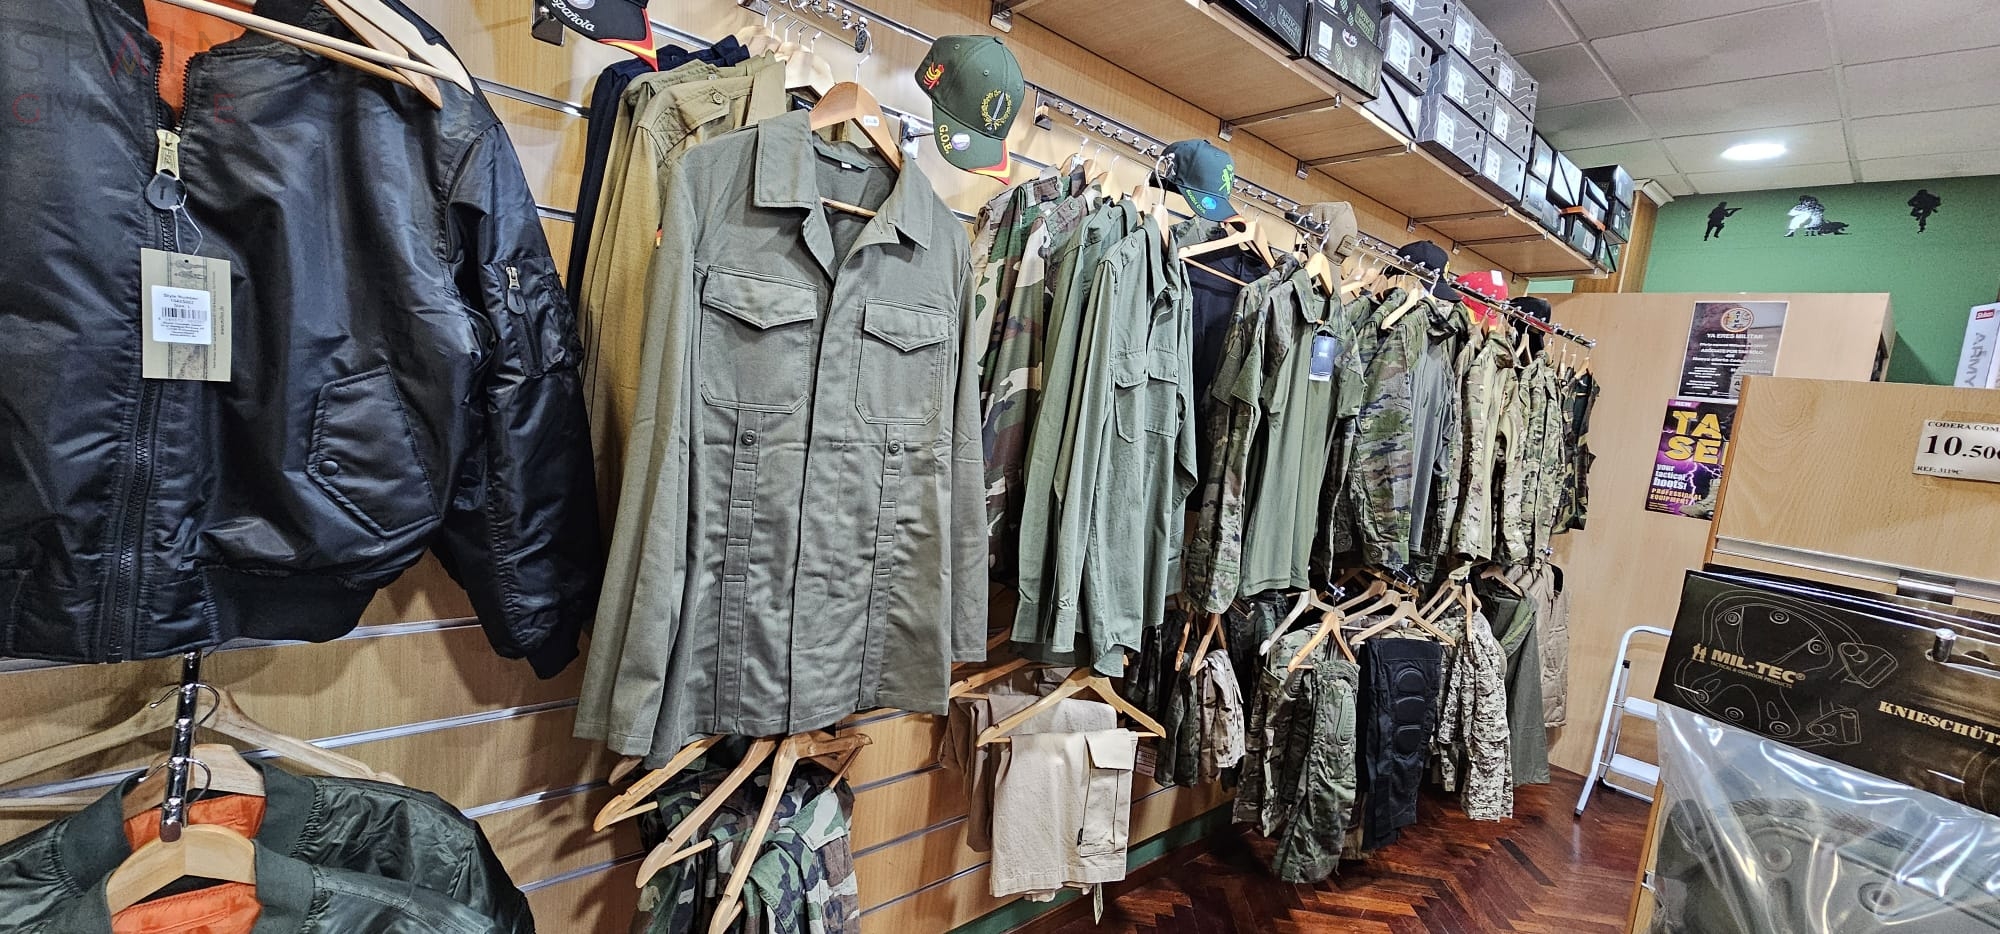 Tienda de ropa militar policia guardia civil caza pesca senderismo Militarix en Cáceres 